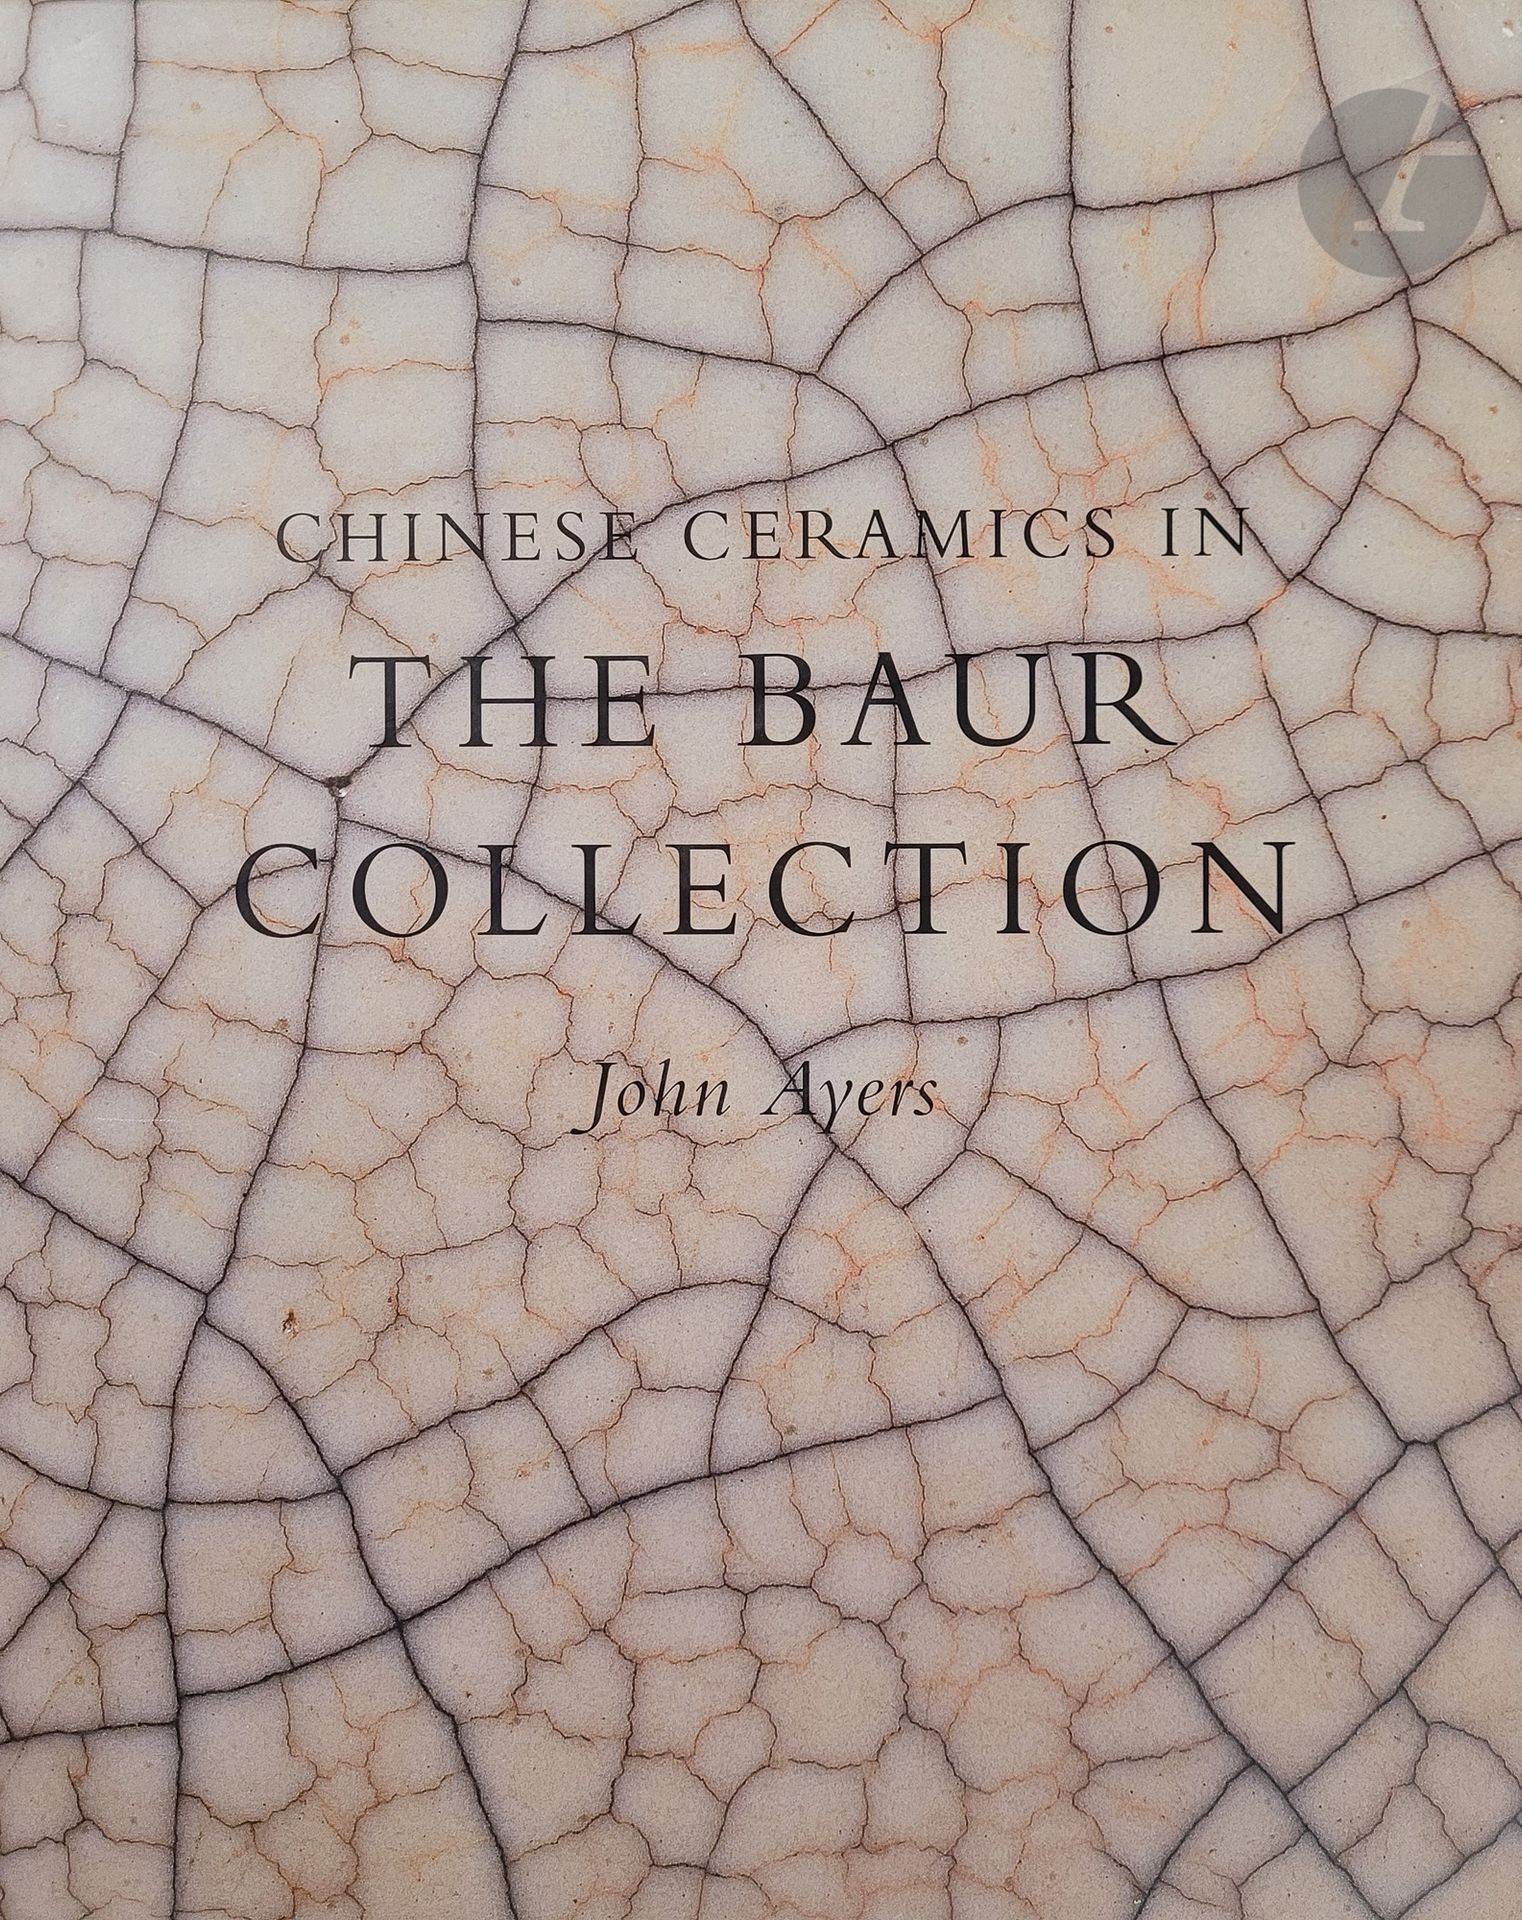 Null 中国-收藏]
艾尔斯-J.，《鲍尔收藏的中国陶瓷》，日内瓦1999年
。
2卷本的精装本。
Schneeberger P.-F., The Baur &hellip;